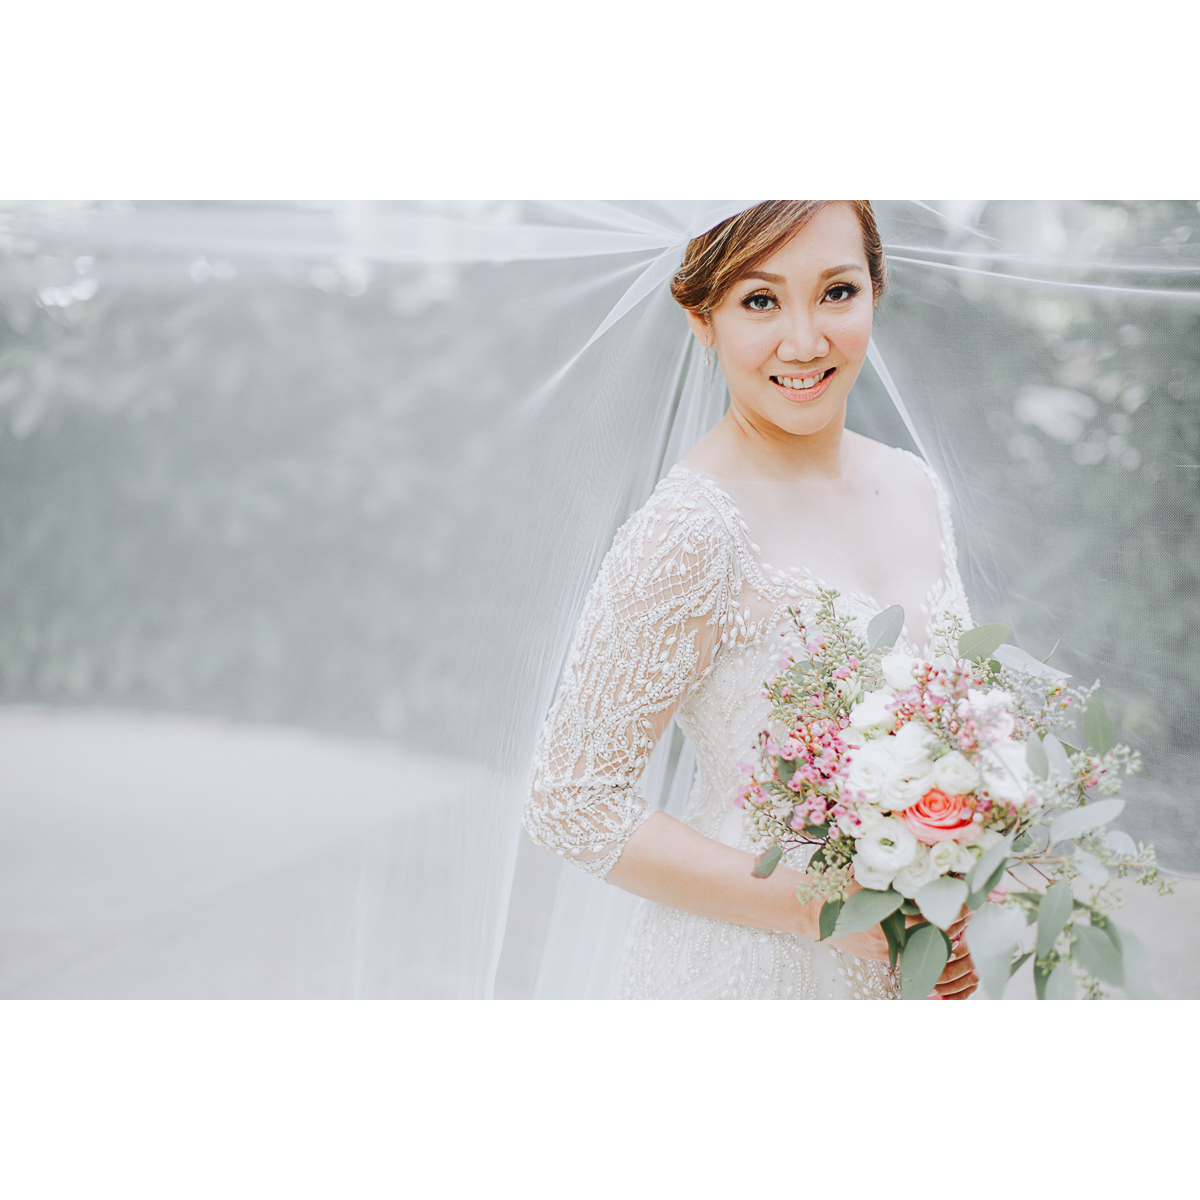 shang mactan wedding0031 - Coleen & Seigfred's Shangrila Mactan Cebu Destination Wedding